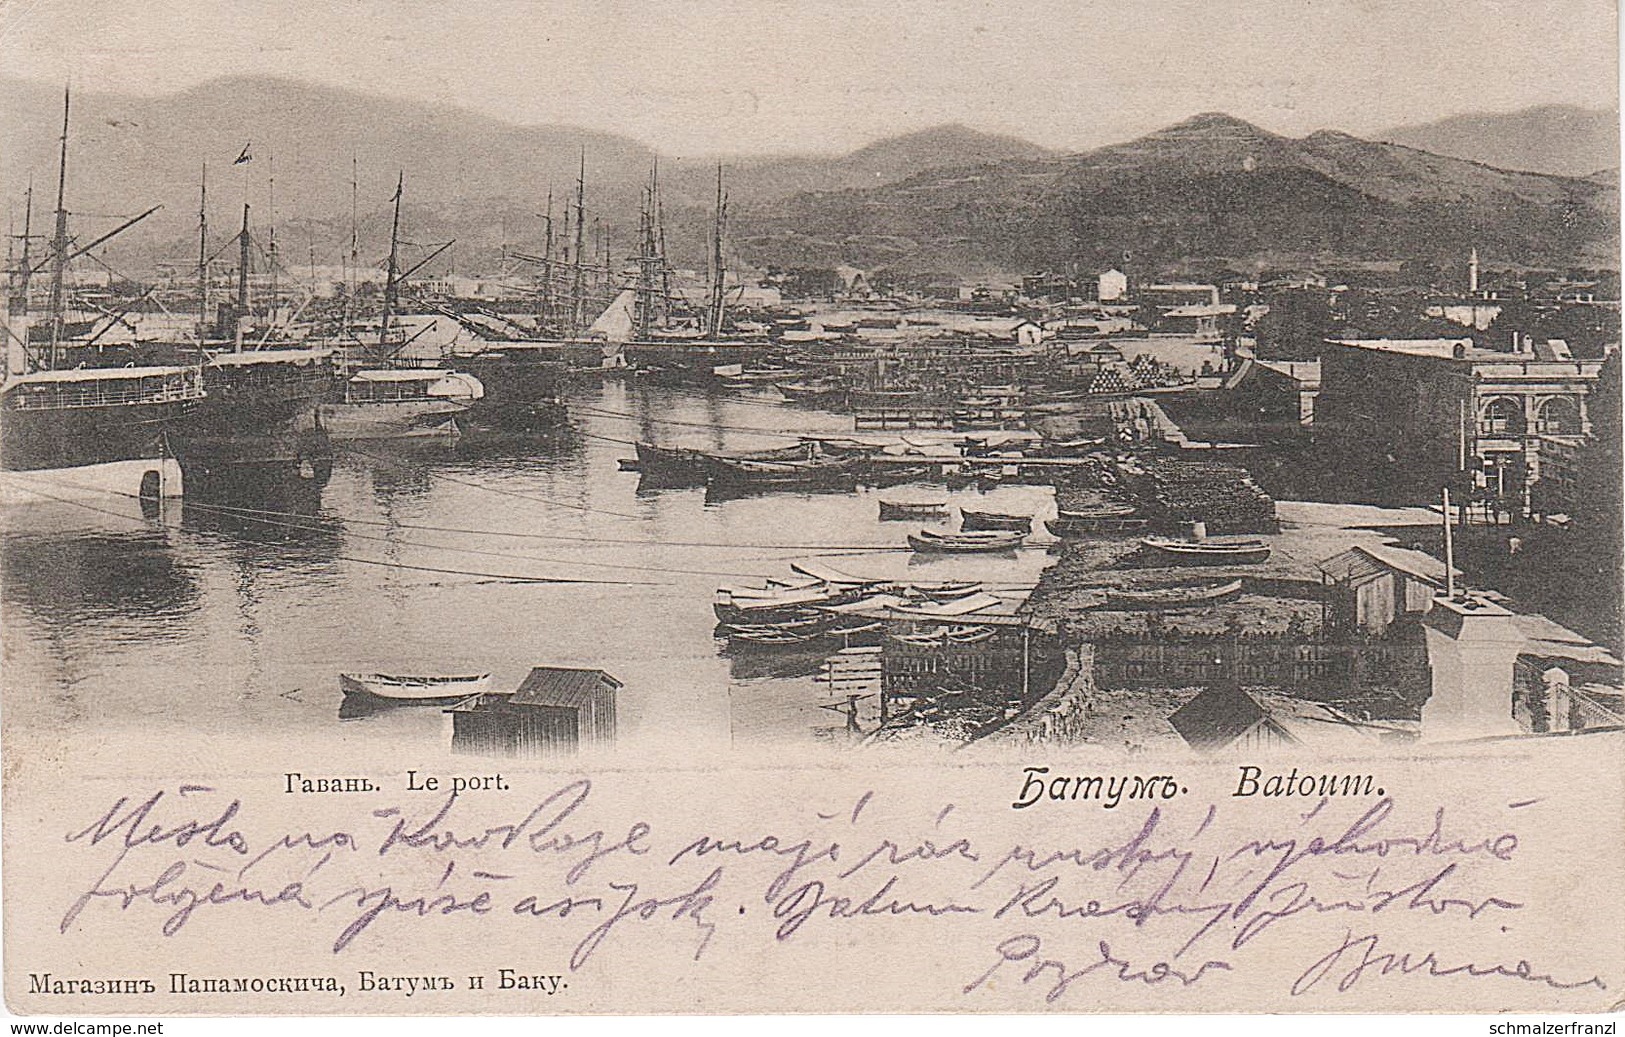 AK Batoum Batumi ბათუმი Батуми Port Hafen Harbour Harbor гавань ნავსადგური Georgien Georgia საქართველო Géorgie - Géorgie